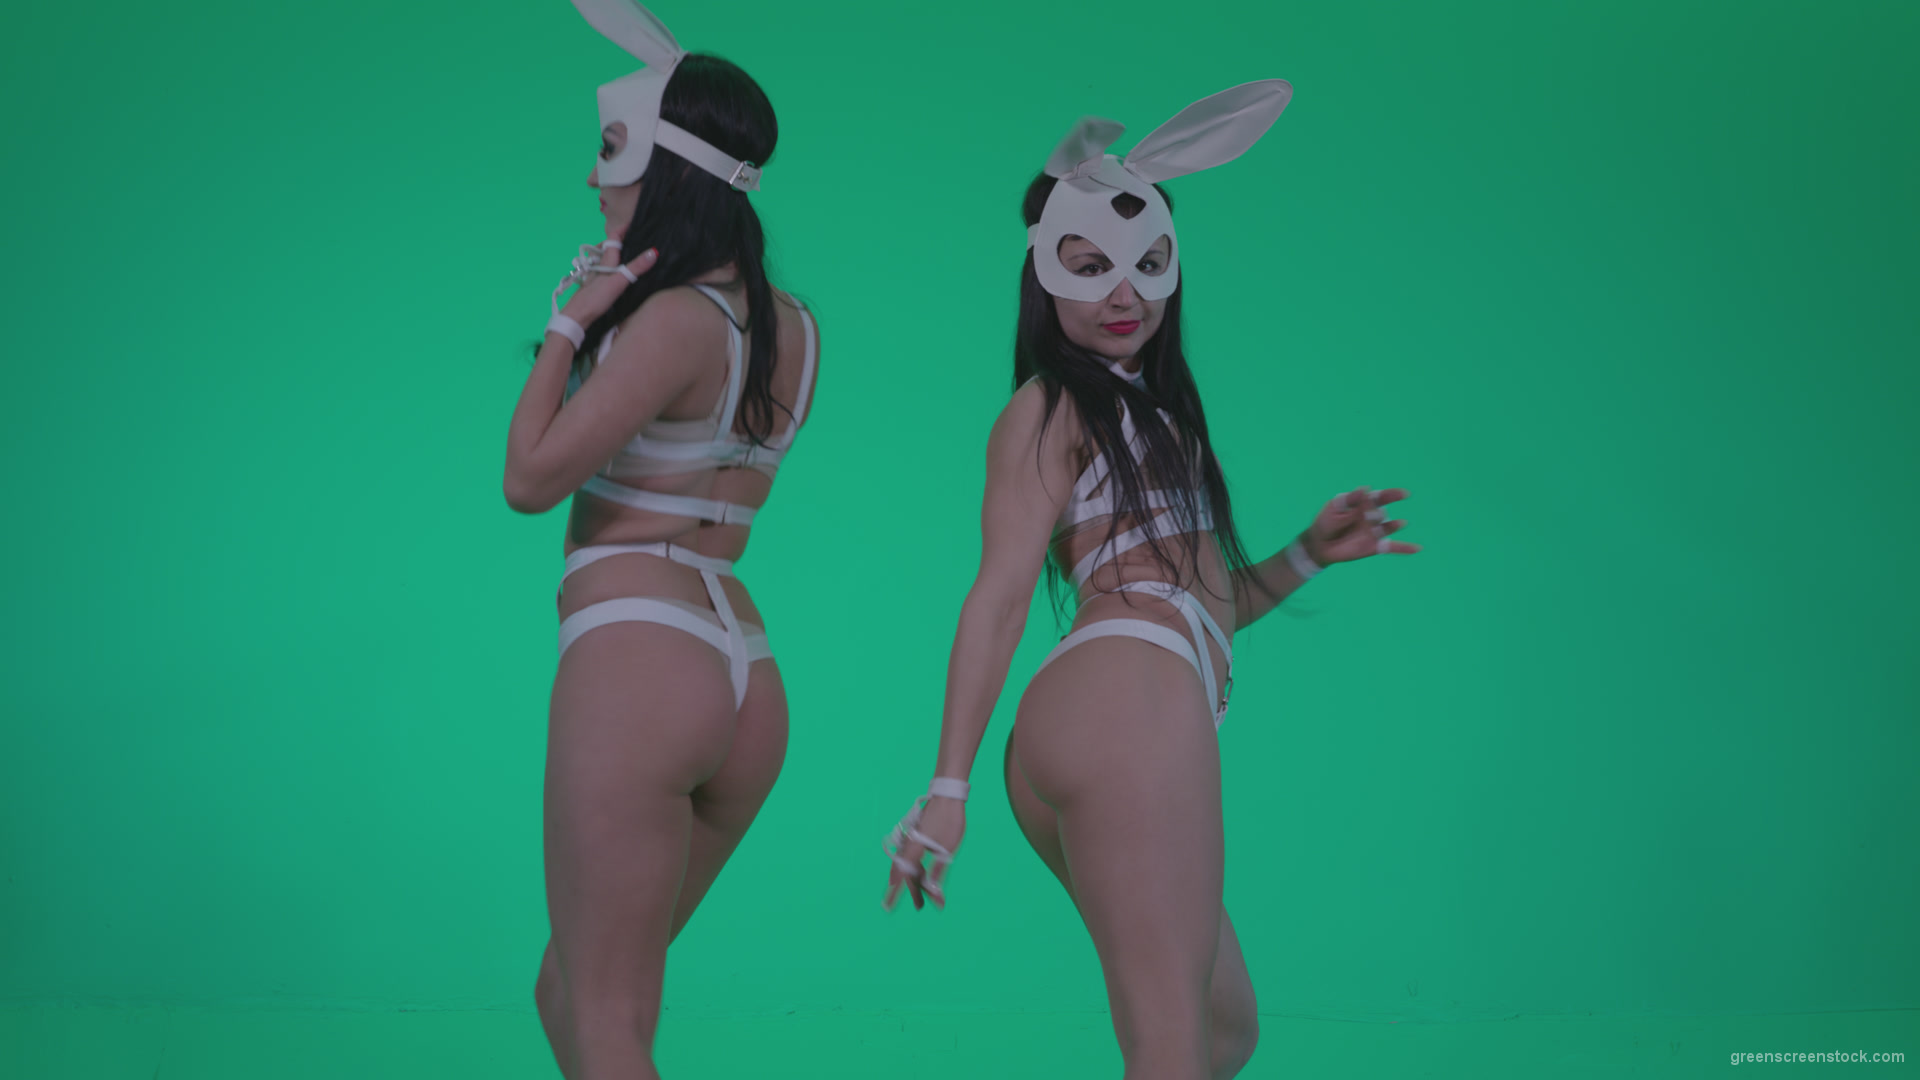 Go-go-Dancer-White-Rabbit-m6-Green-Screen-Video-Footage_001 Green Screen Stock